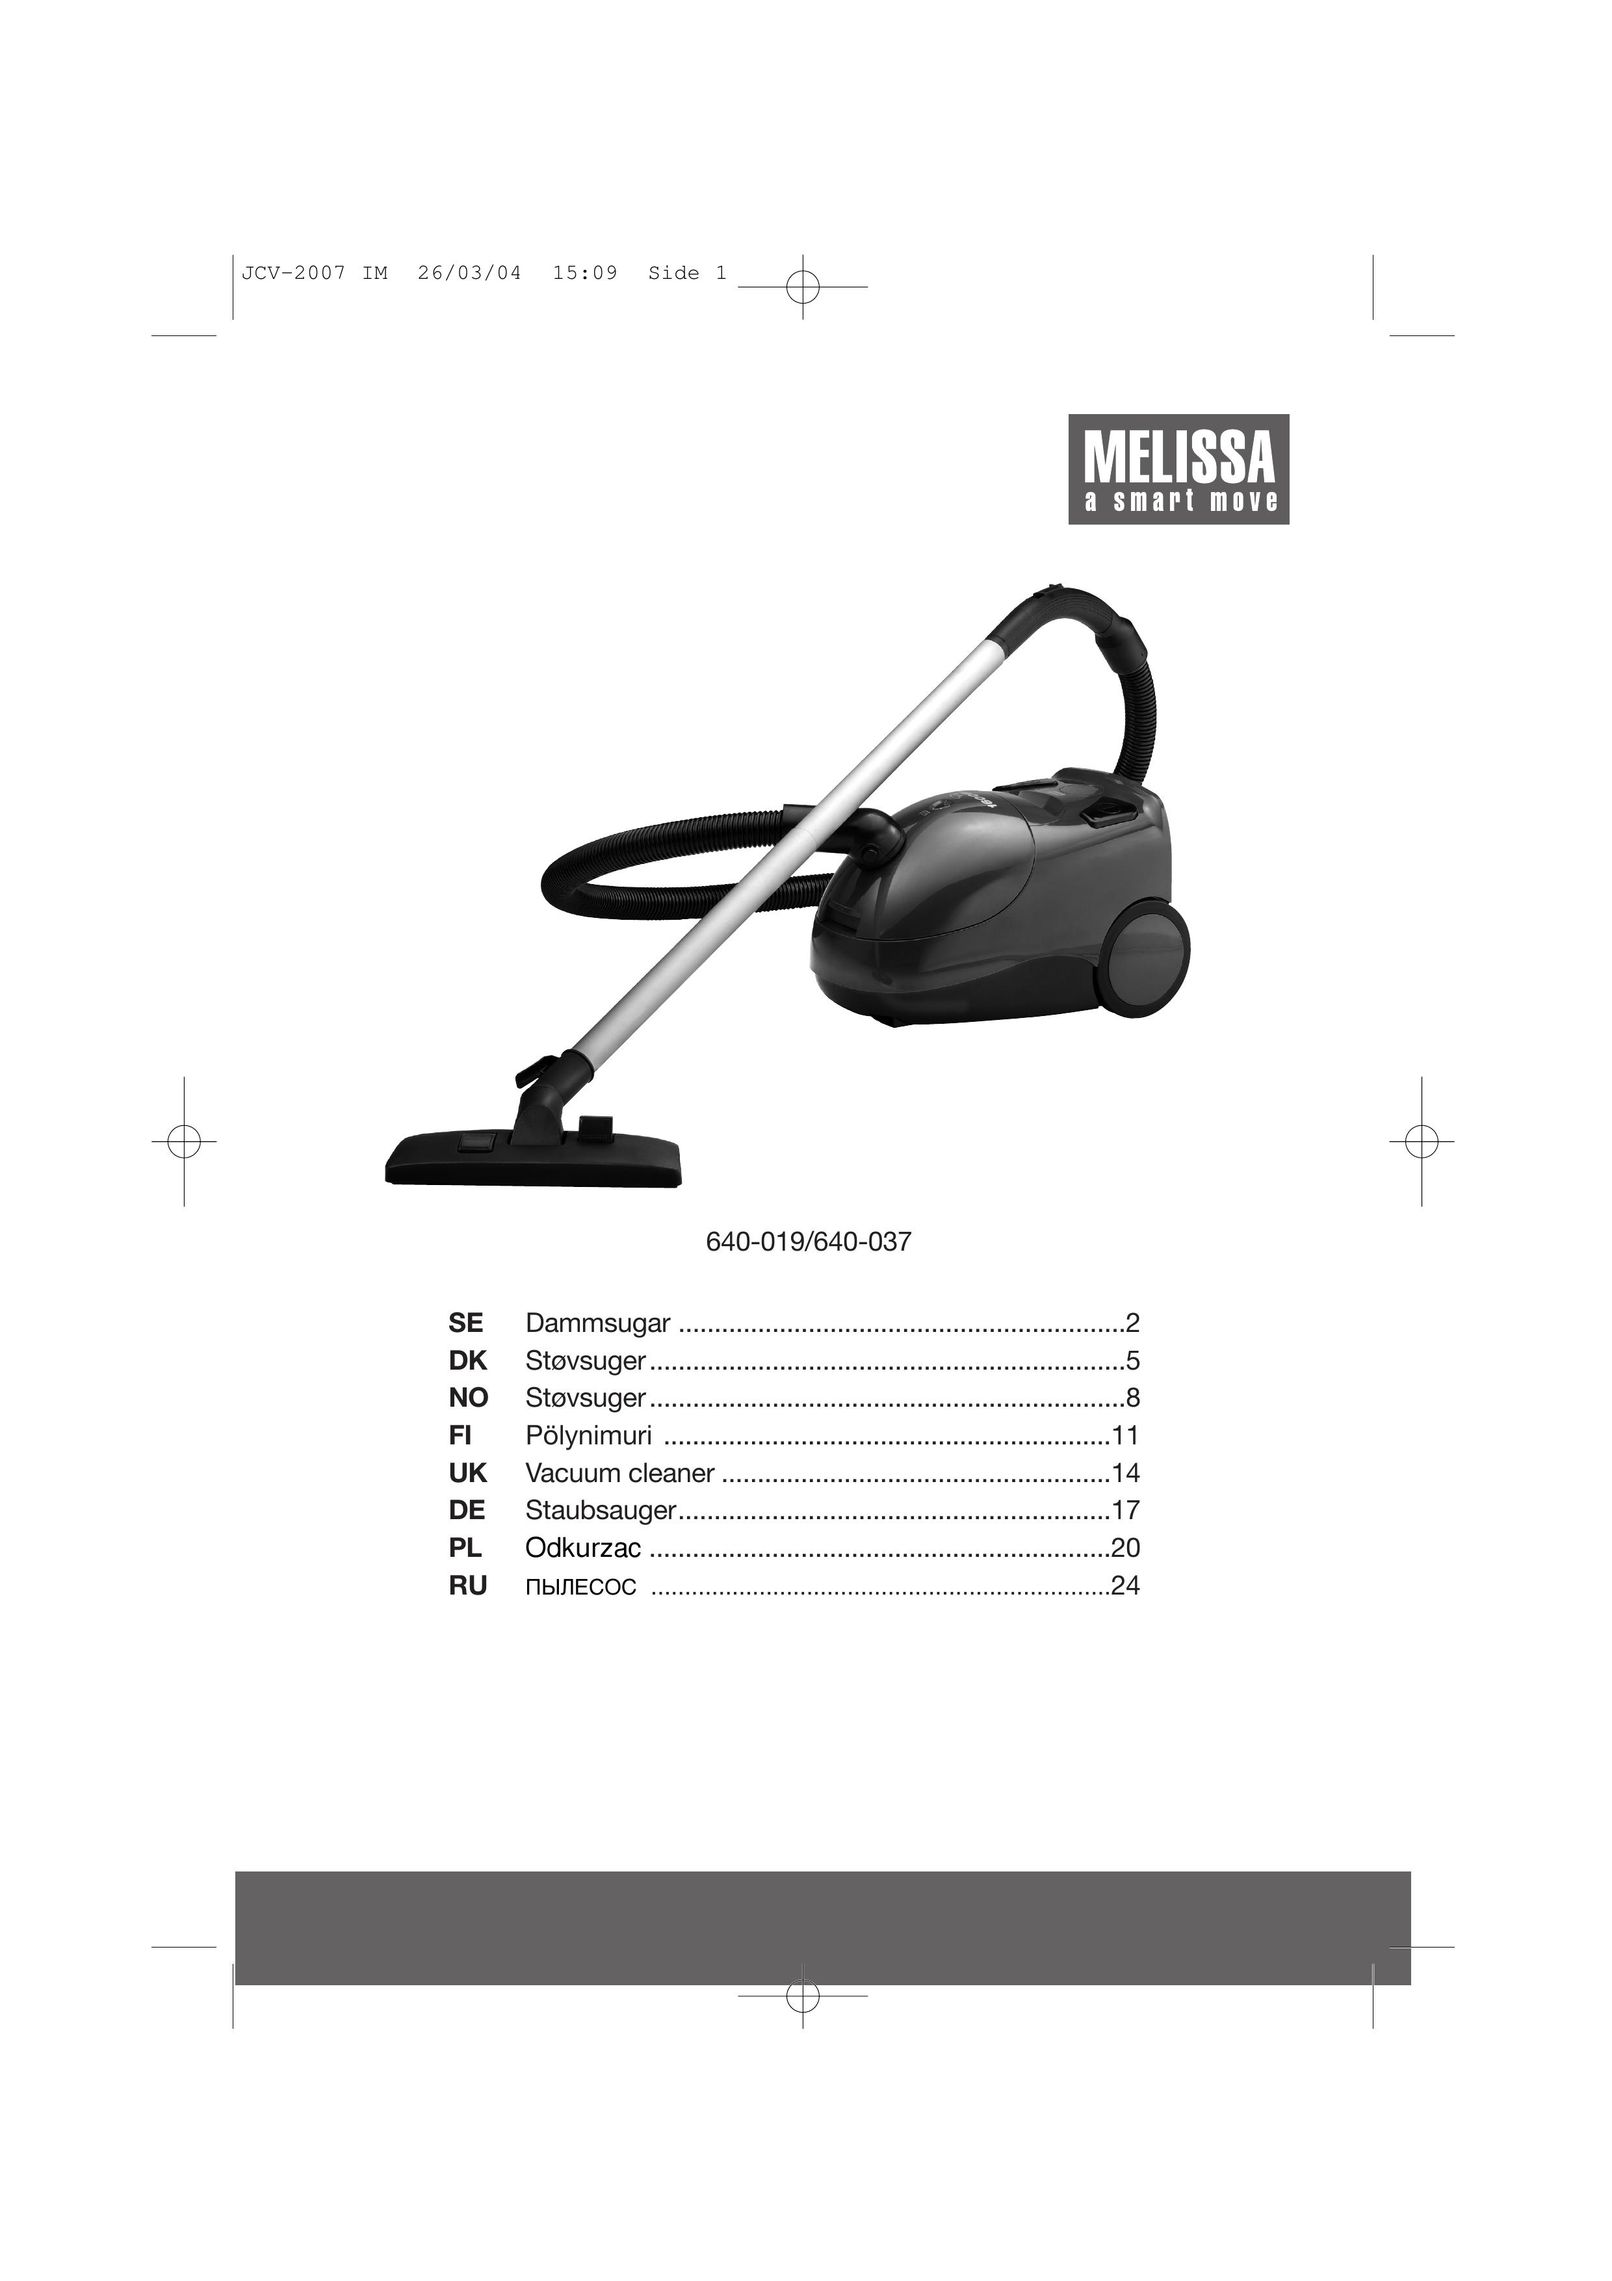 Melissa 640-037 Vacuum Cleaner User Manual